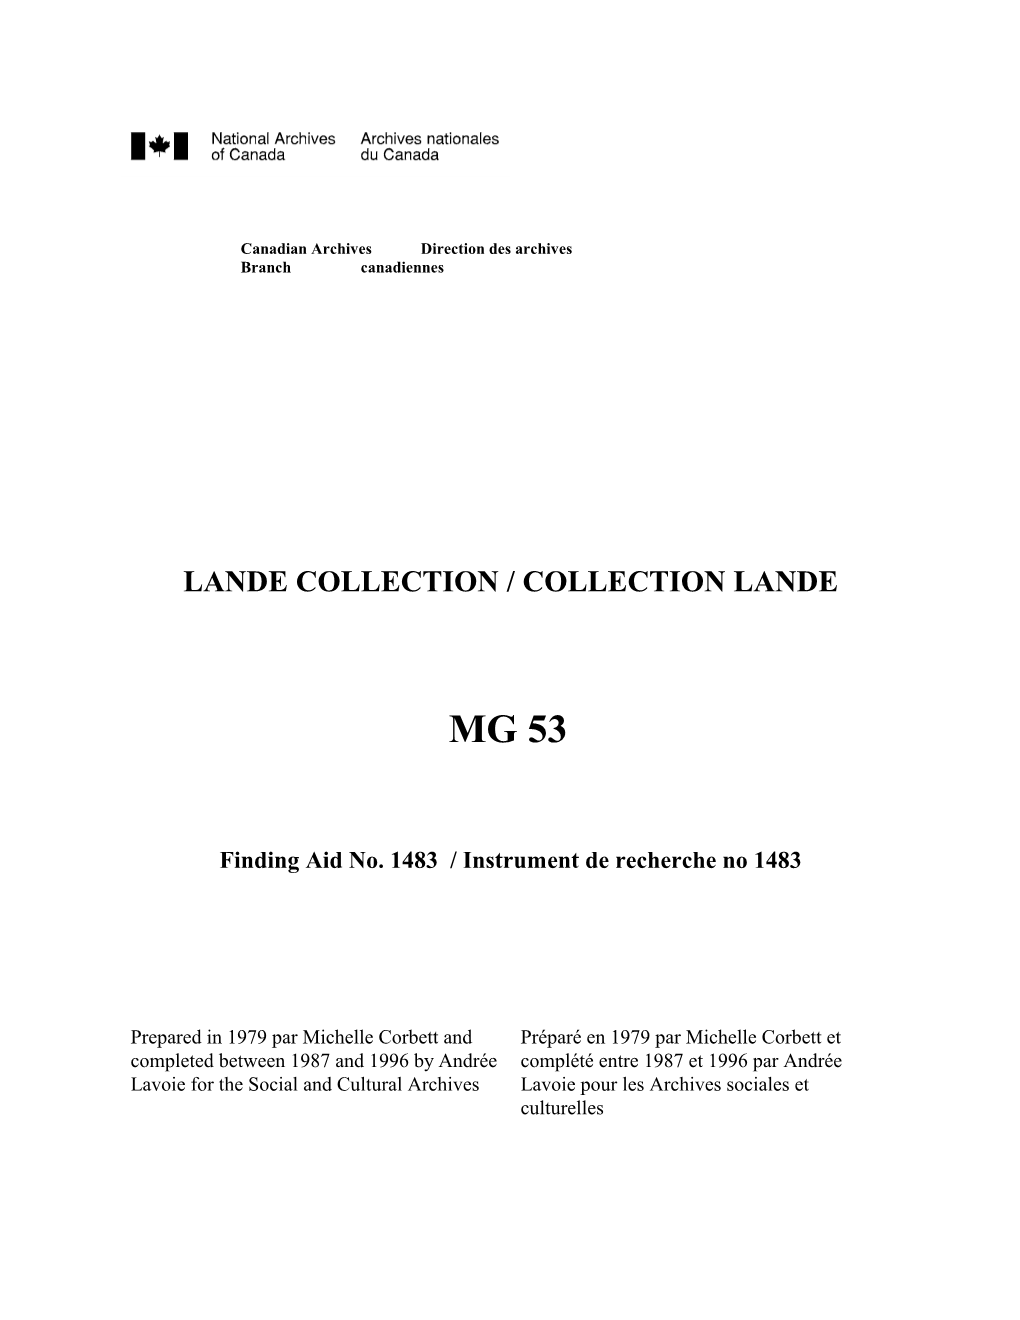 Lande Collection / Collection Lande